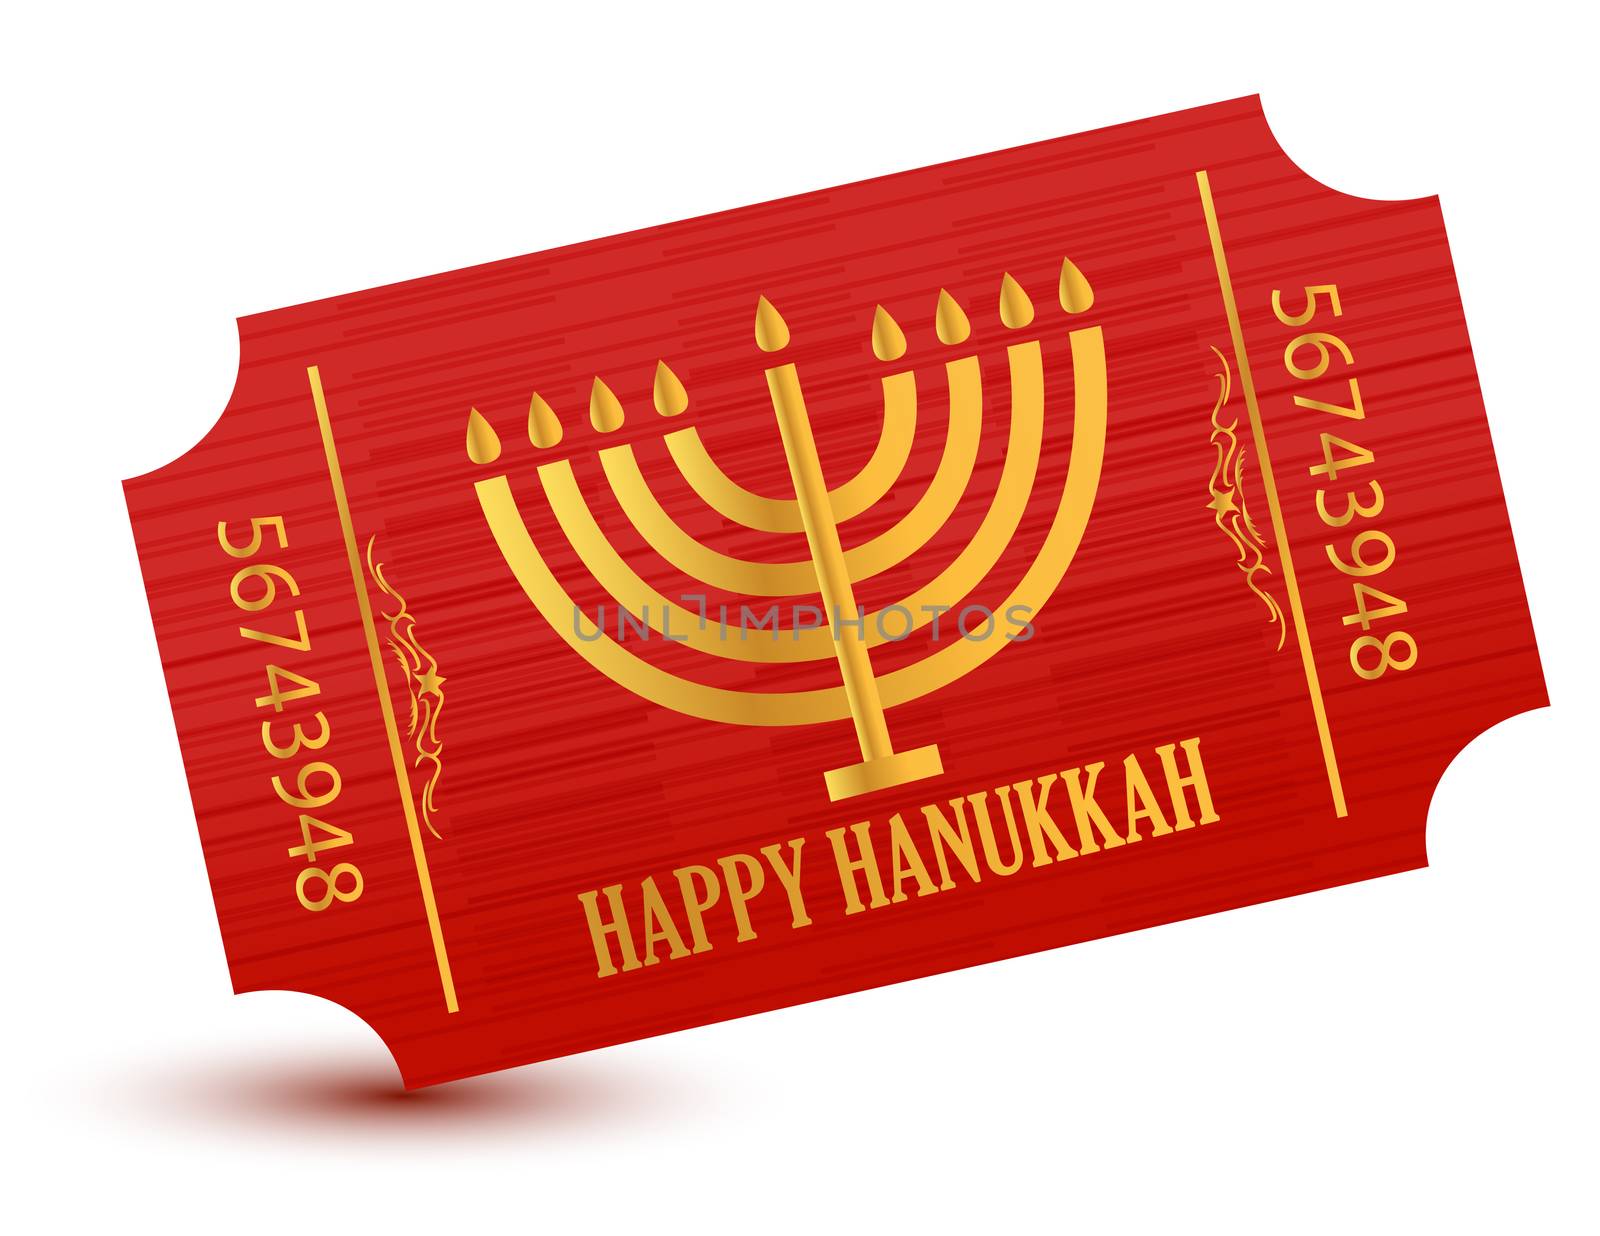 Happy hanukkah event ticket illustration